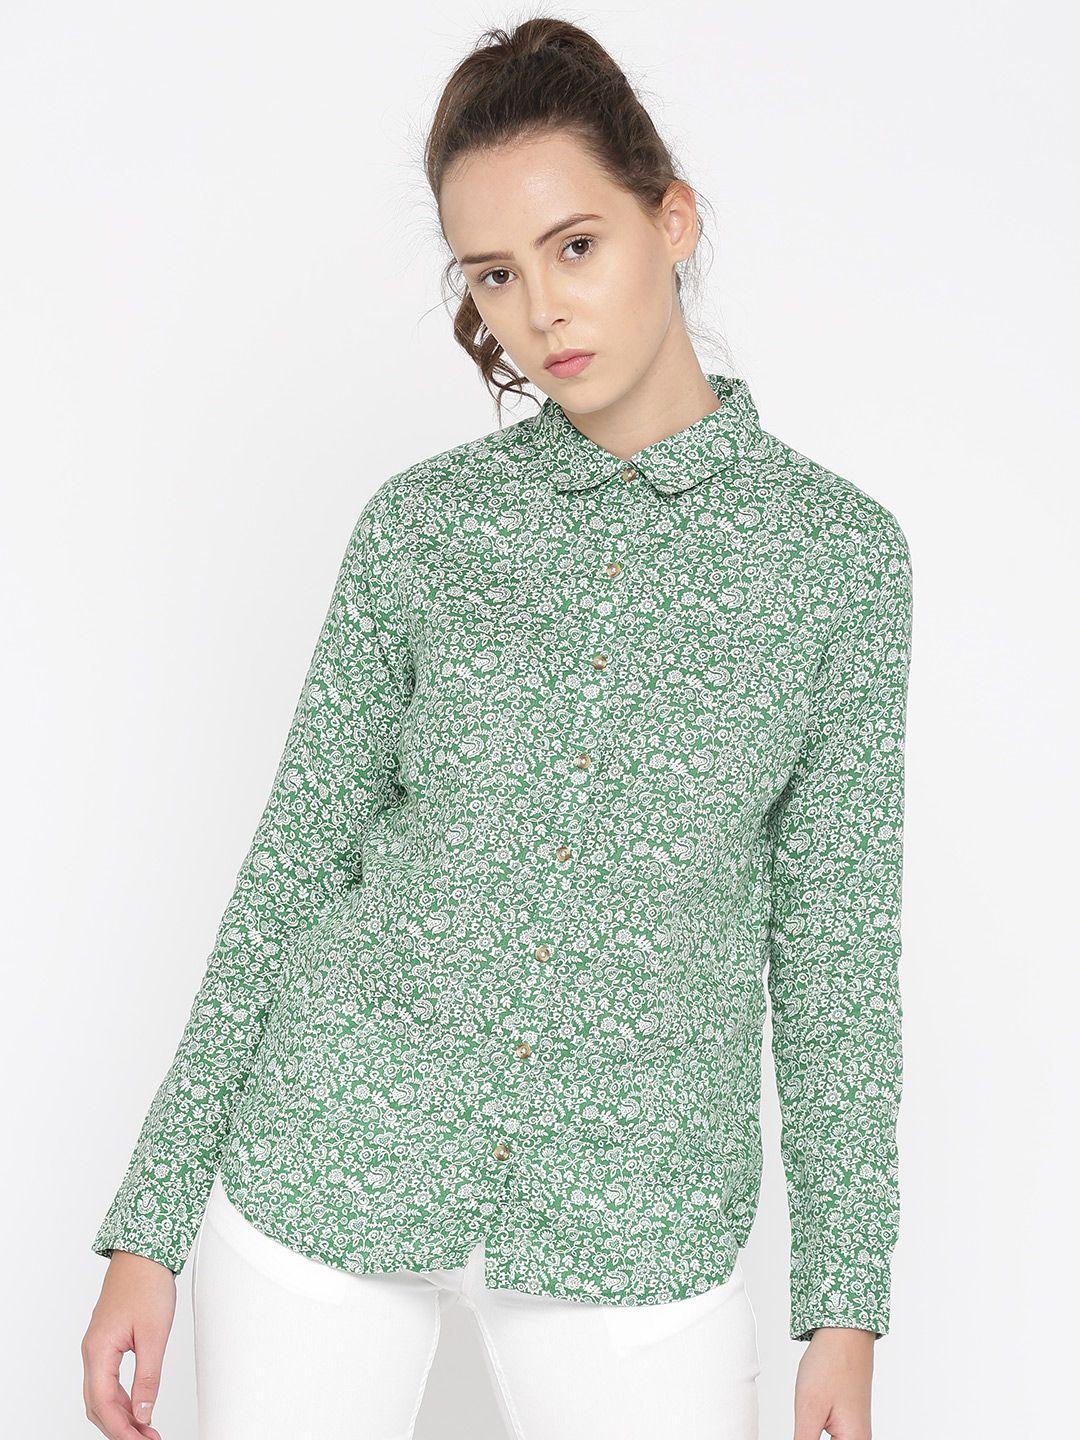 u.s. polo assn. women green & white regular fit printed casual shirt